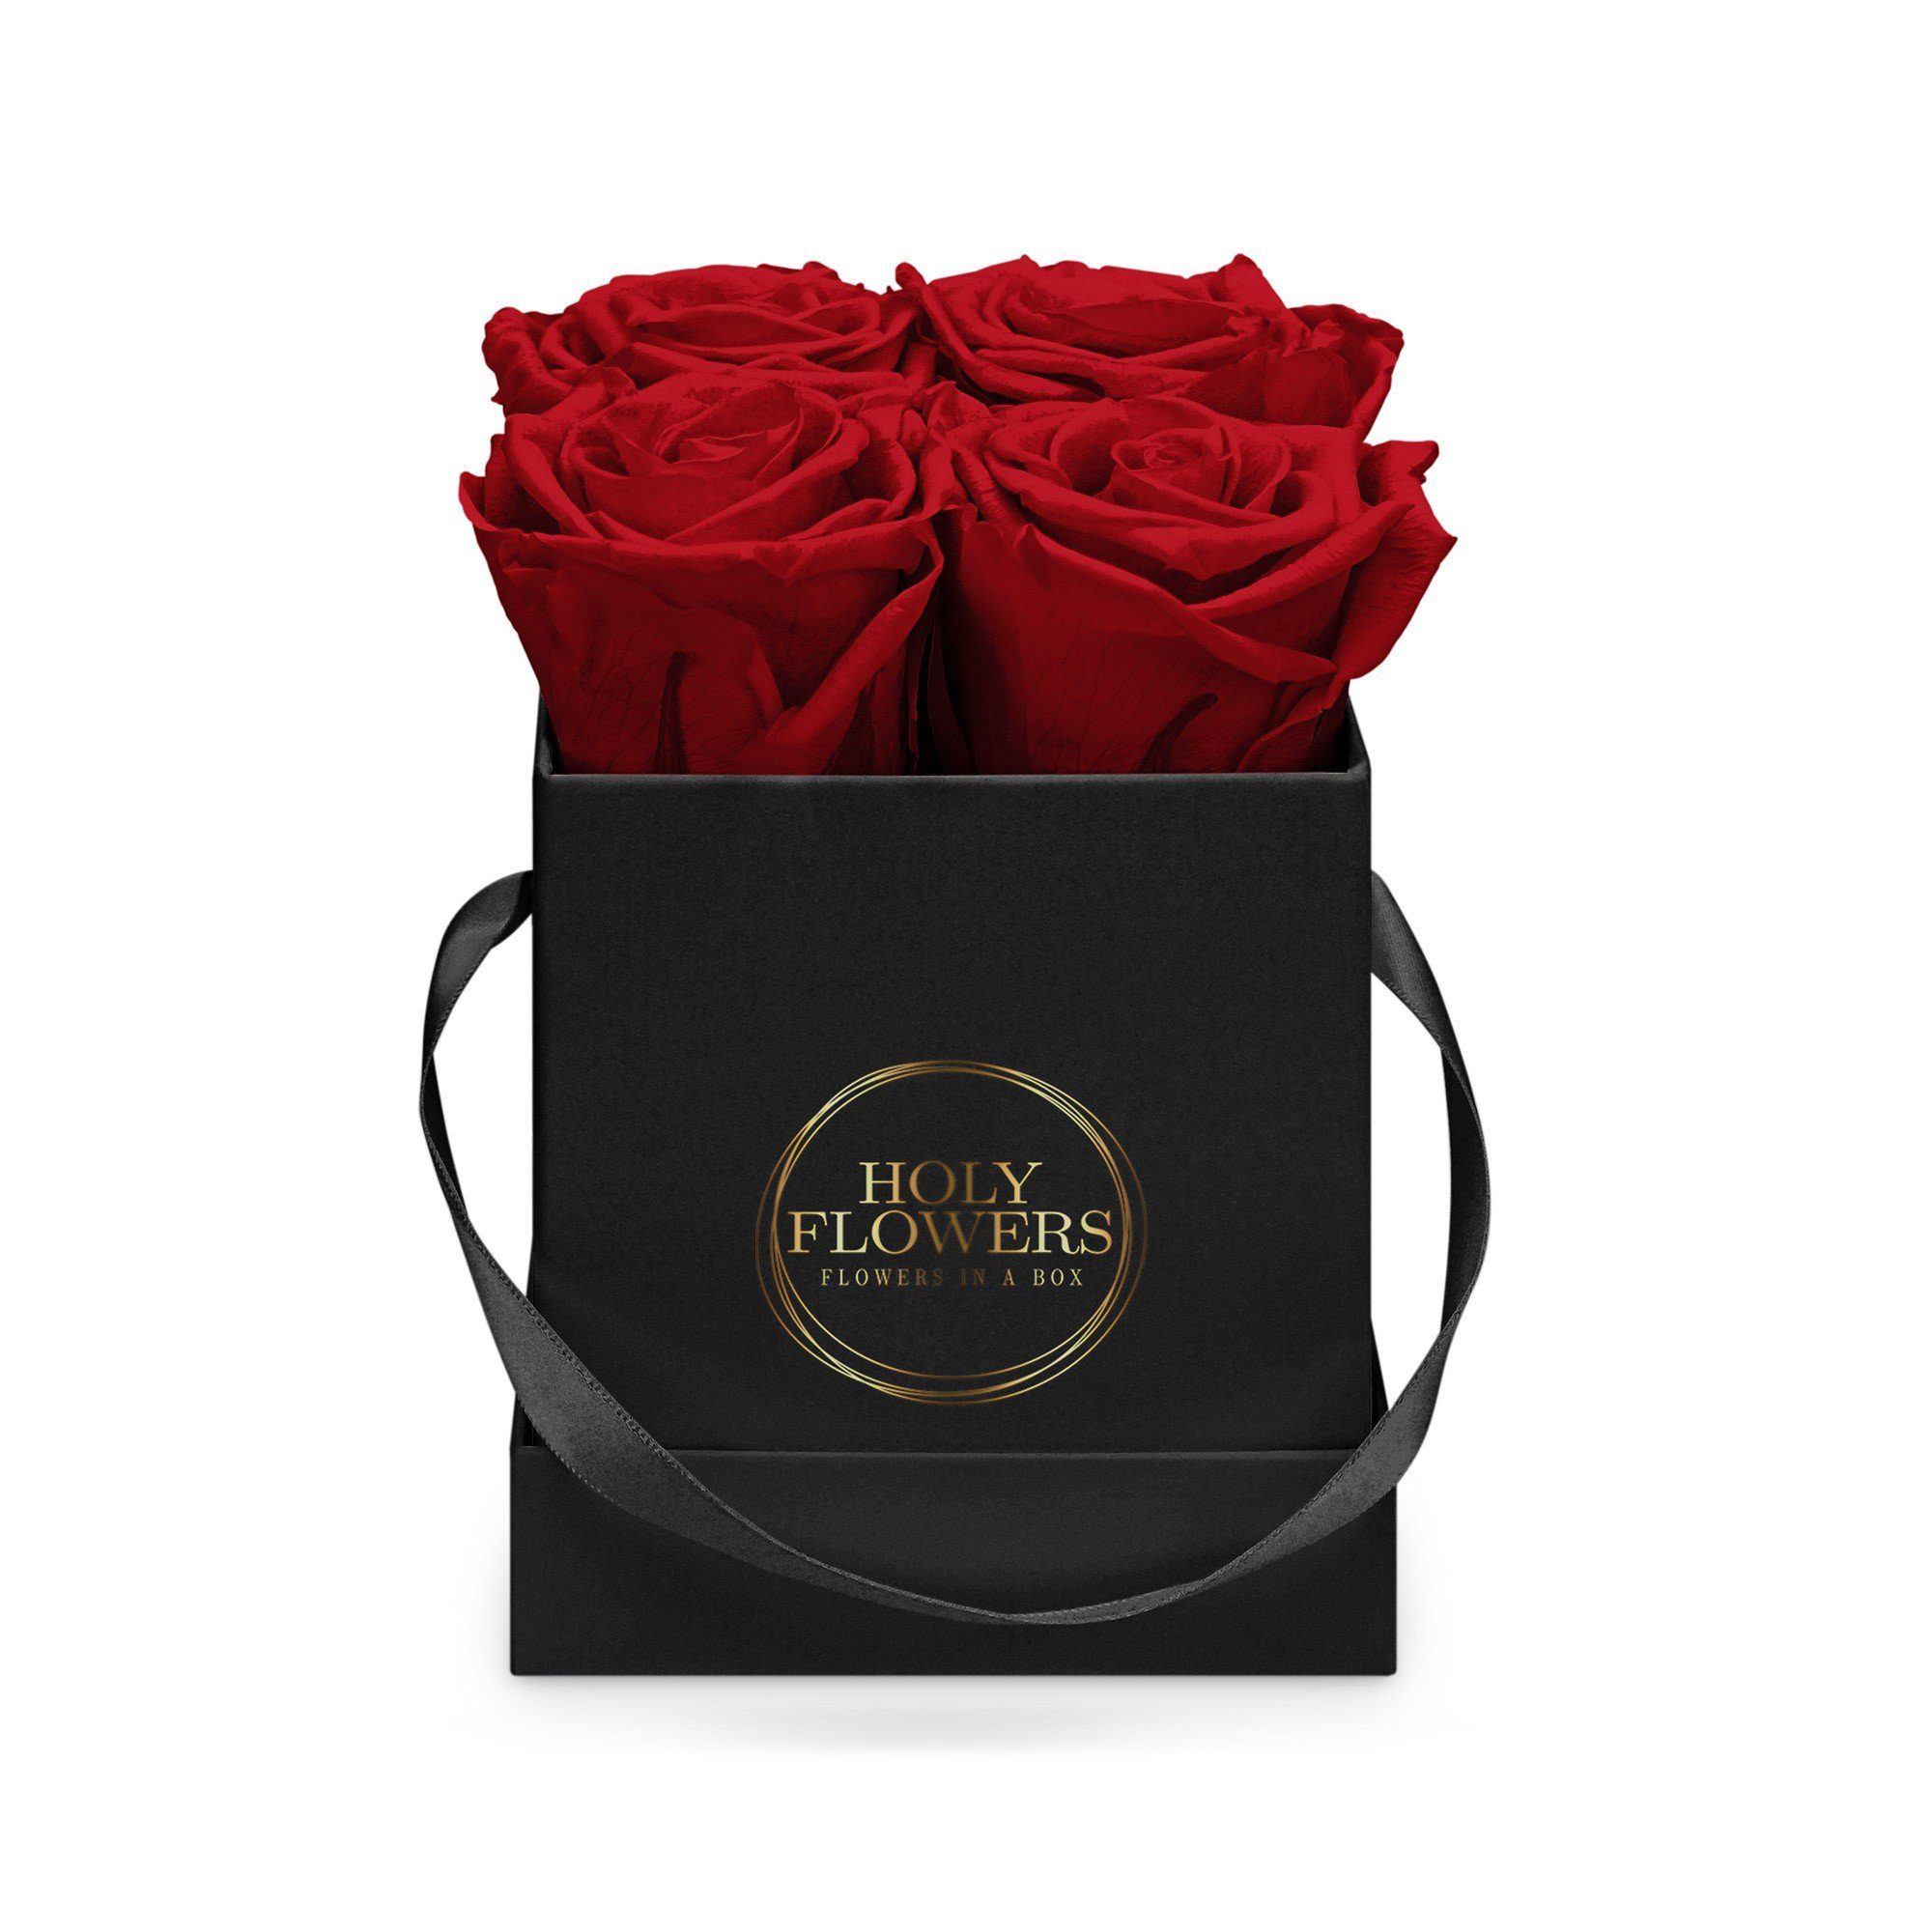 Kunstblume Eckige Rosenbox in schwarz Blumen Raul cm Holy 11 duftende Heritage Jahre konservierte Flowers, Echte, by I 4 Höhe Rosen haltbar mit Infinity I Richter Red 3 I Infinity Rose